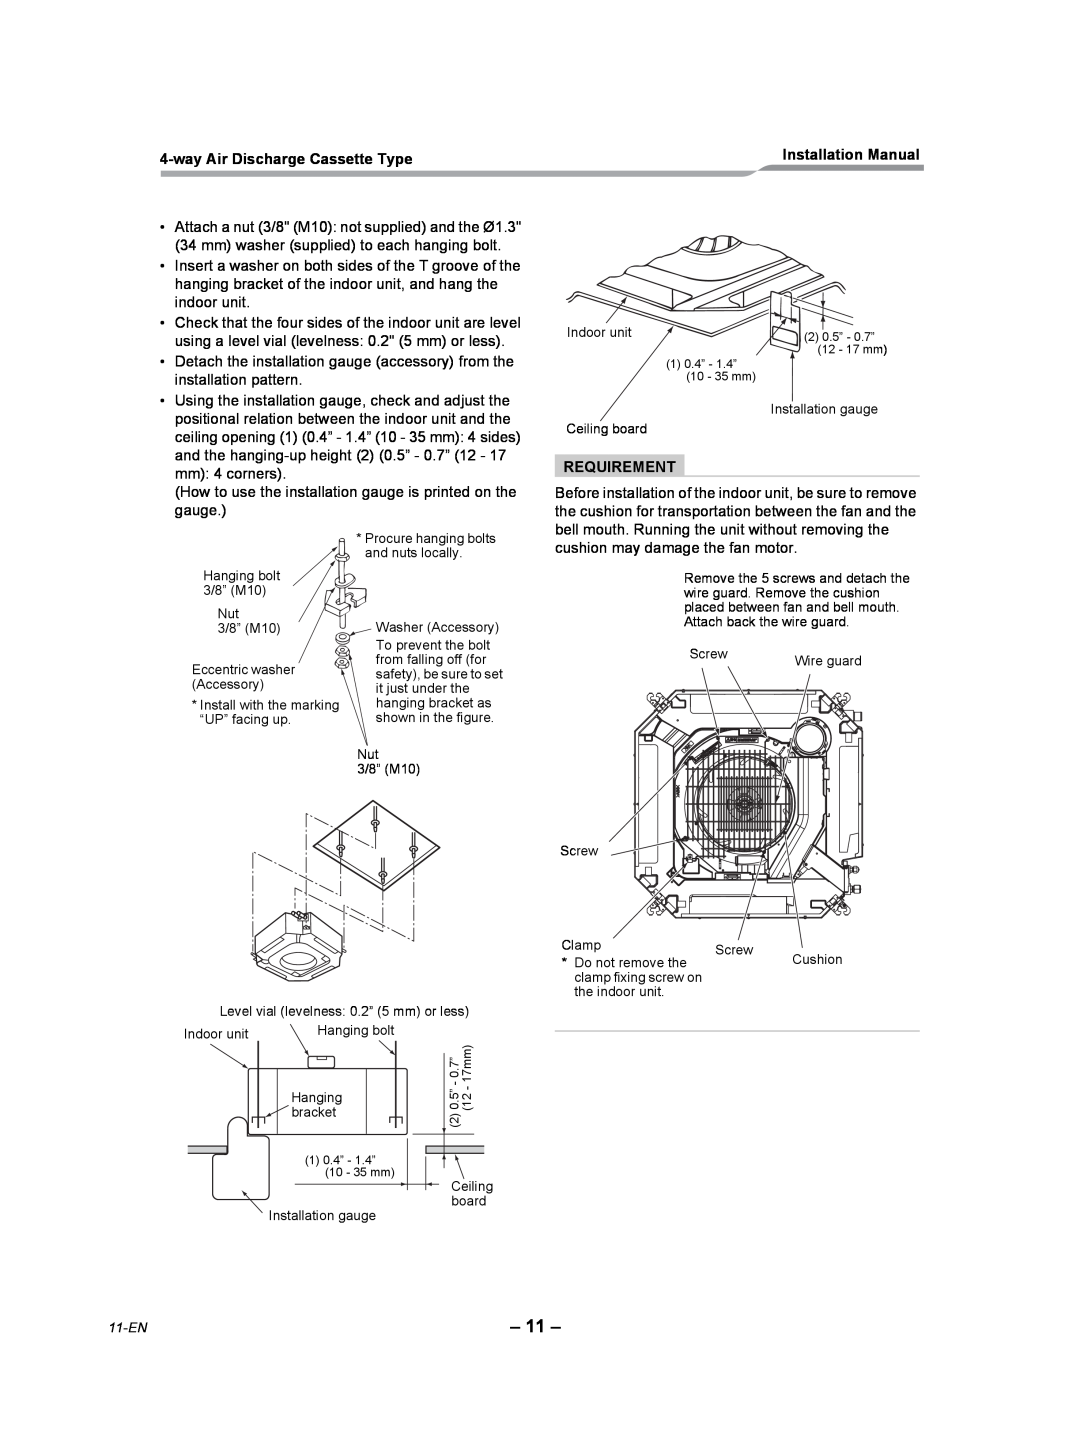 Toshiba RAV-SP180UT-UL installation manual wayAir Discharge Cassette Type, Requirement 